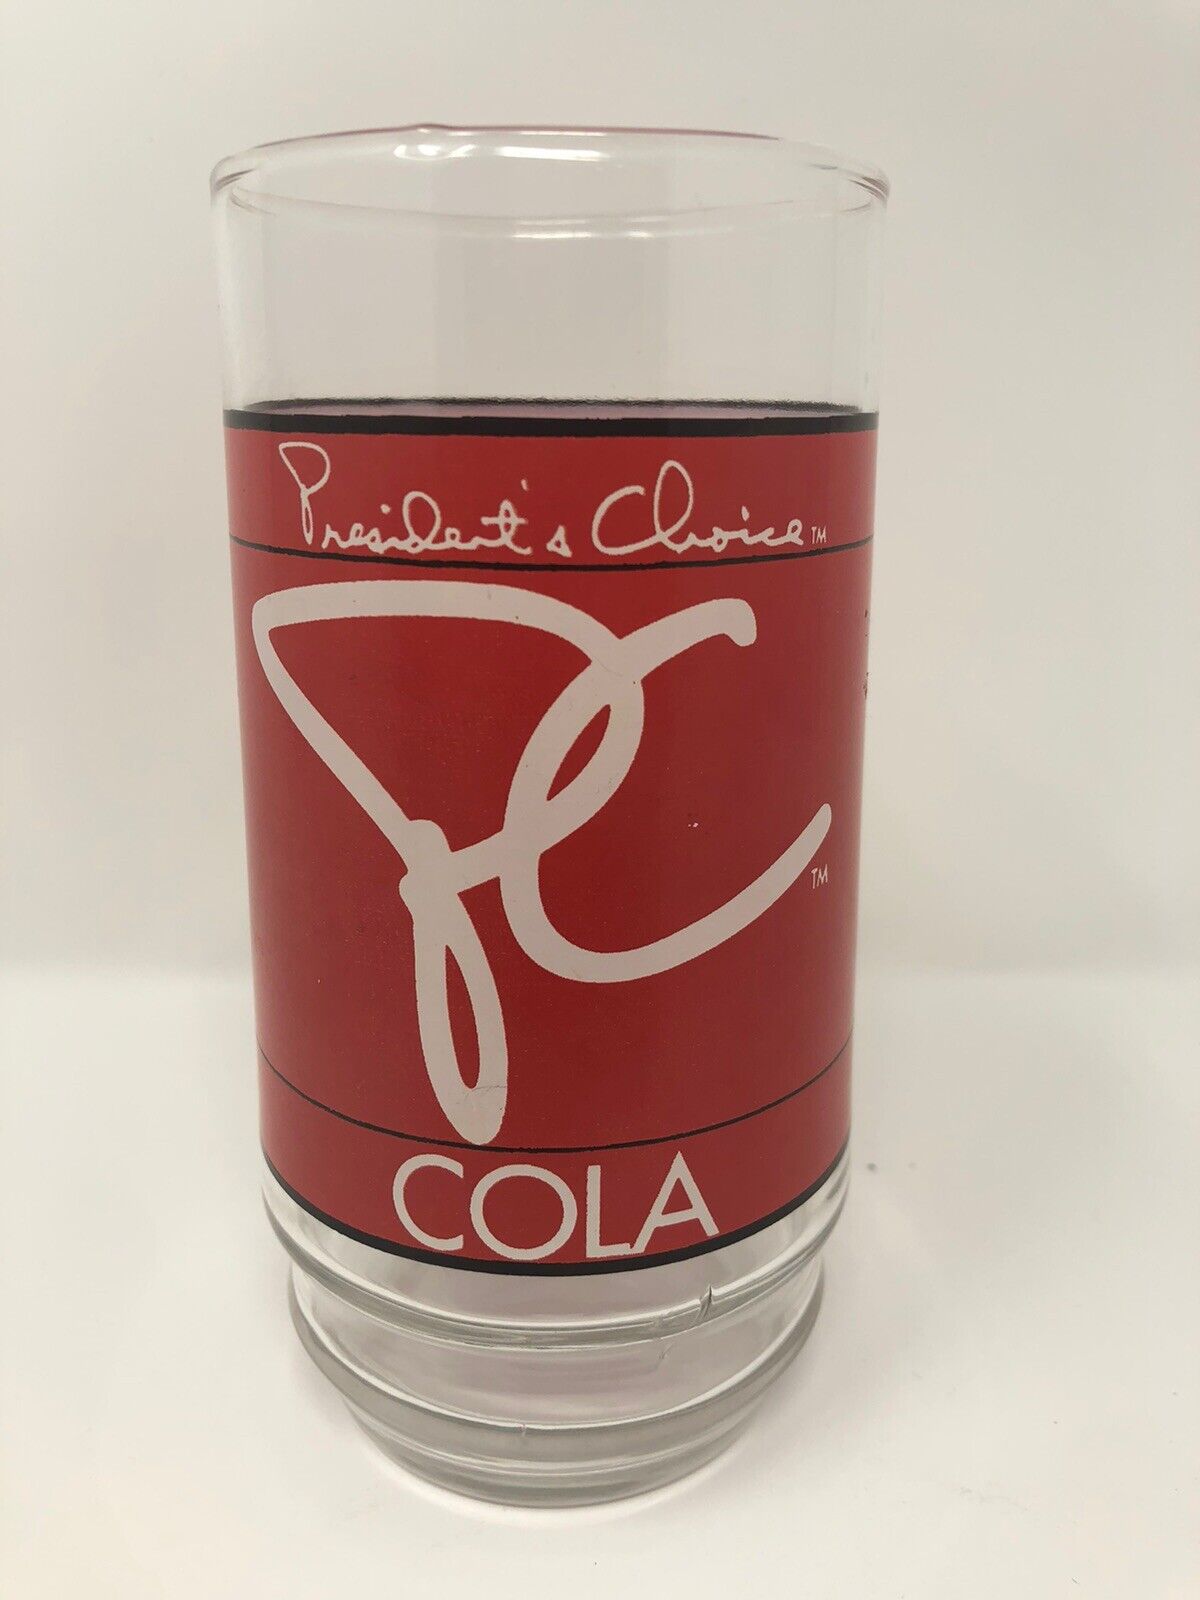 PC President\'s Choice Cola Soda Glass - Drinkware Cup - 16oz - Rare